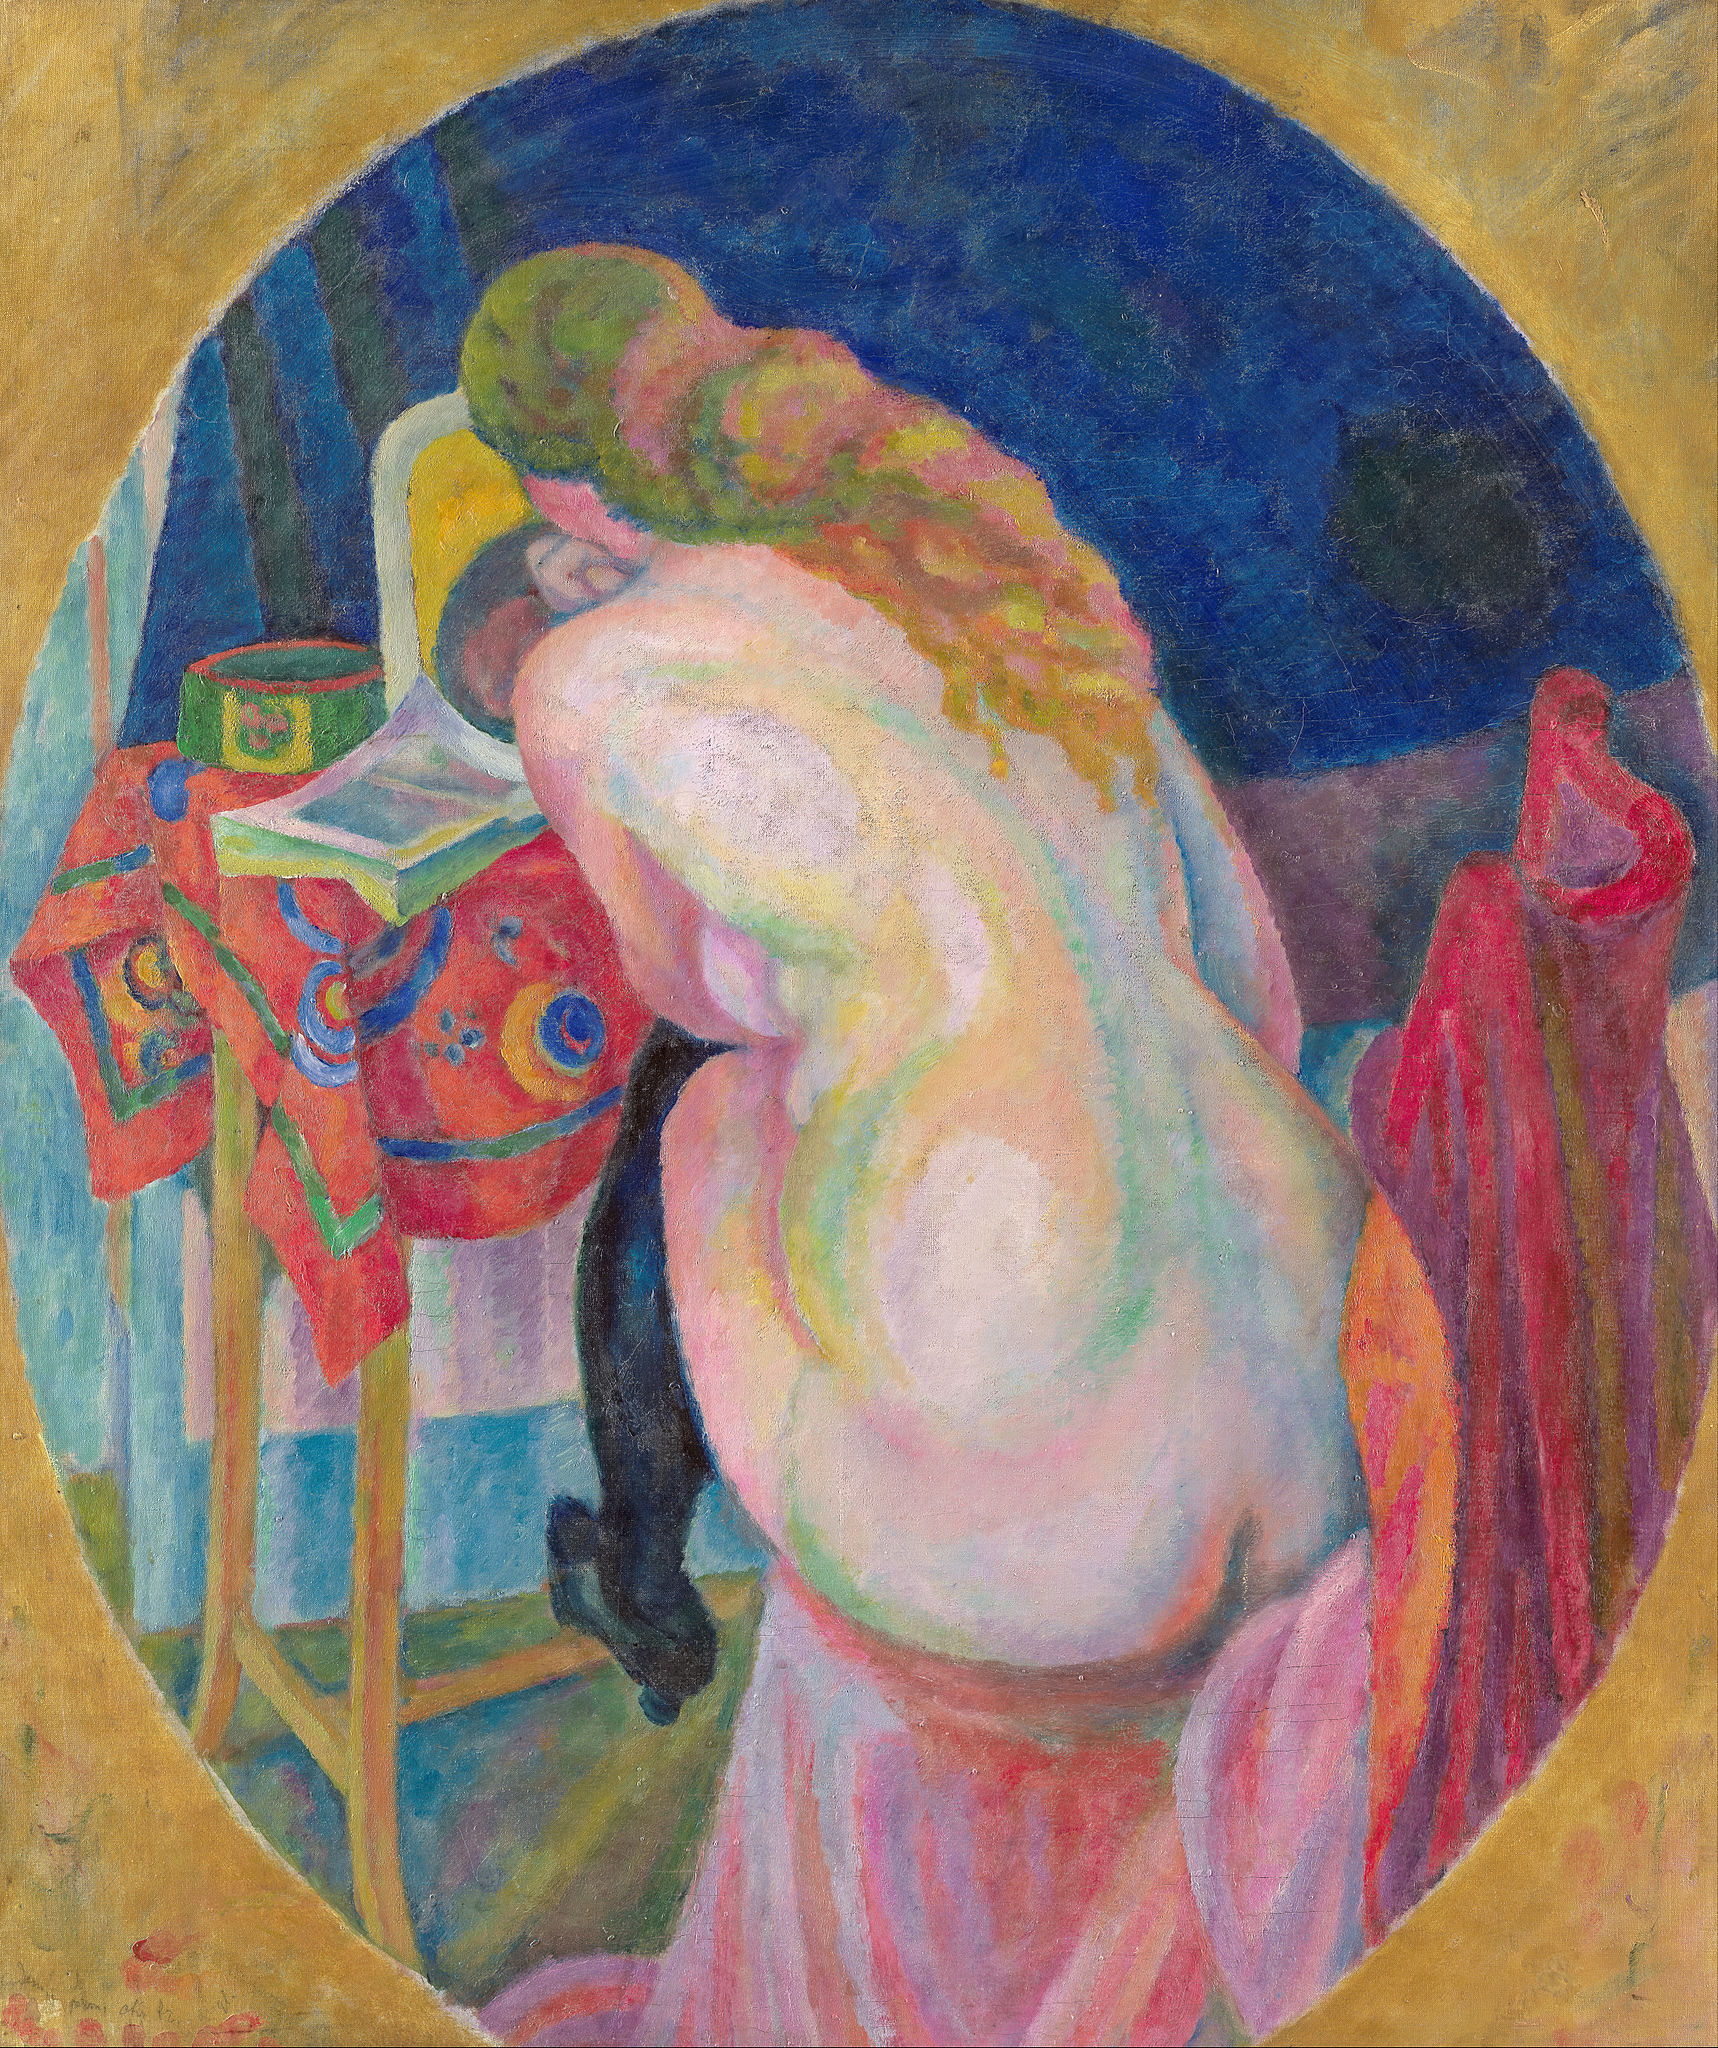 Naked Woman Reading by Robert Delaunay - 1915. - 86.2 x 72.4 цм 